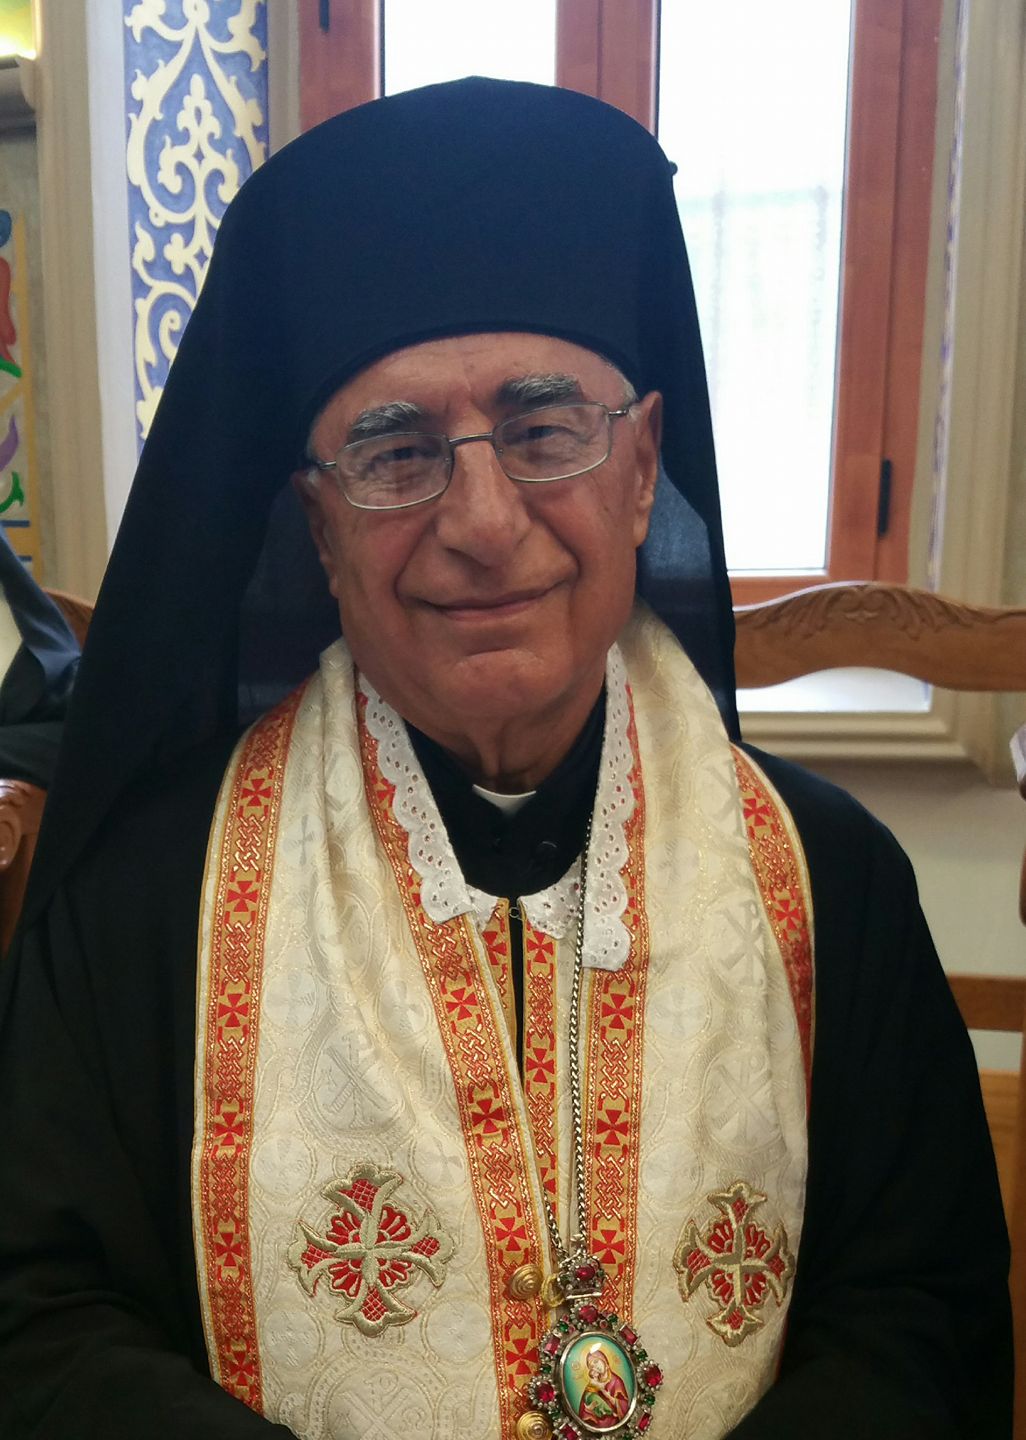 Joseph Absi new Melkite Patriarch | Communio